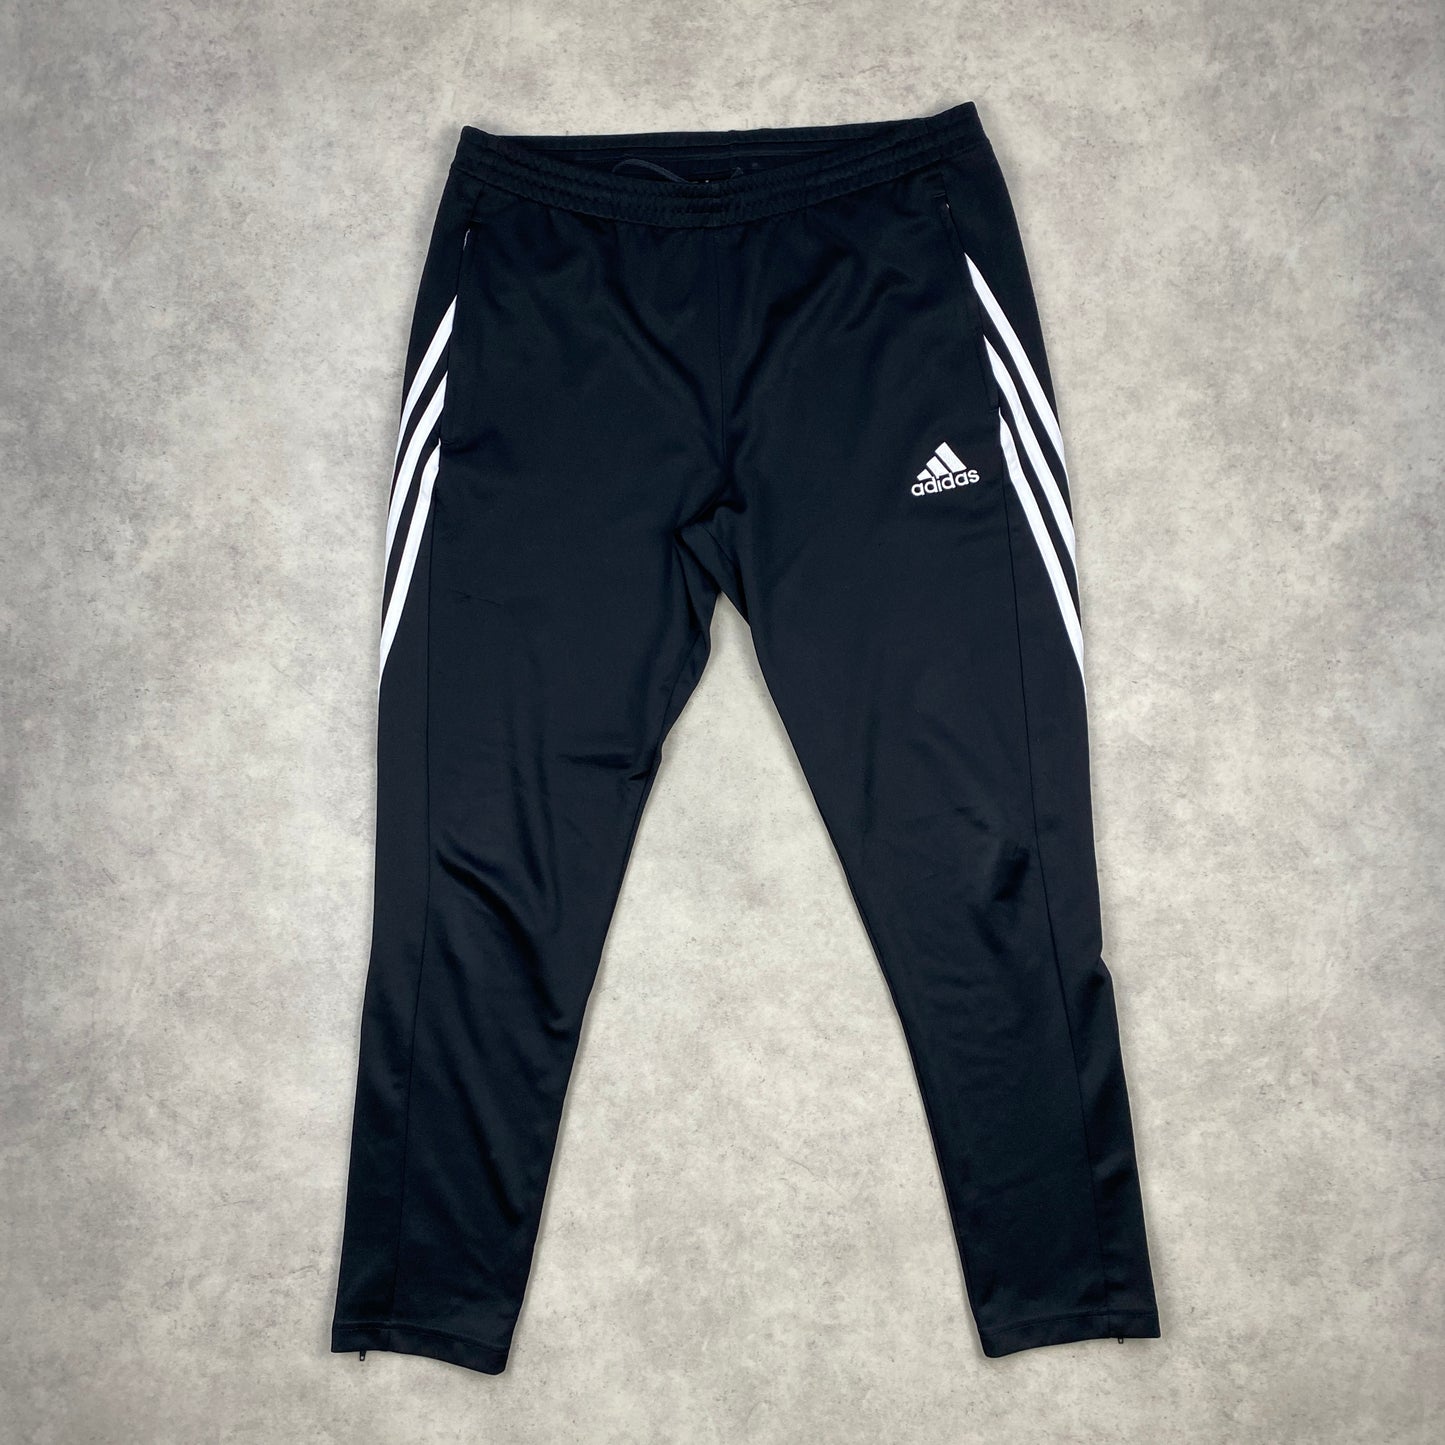 Adidas pants (L)